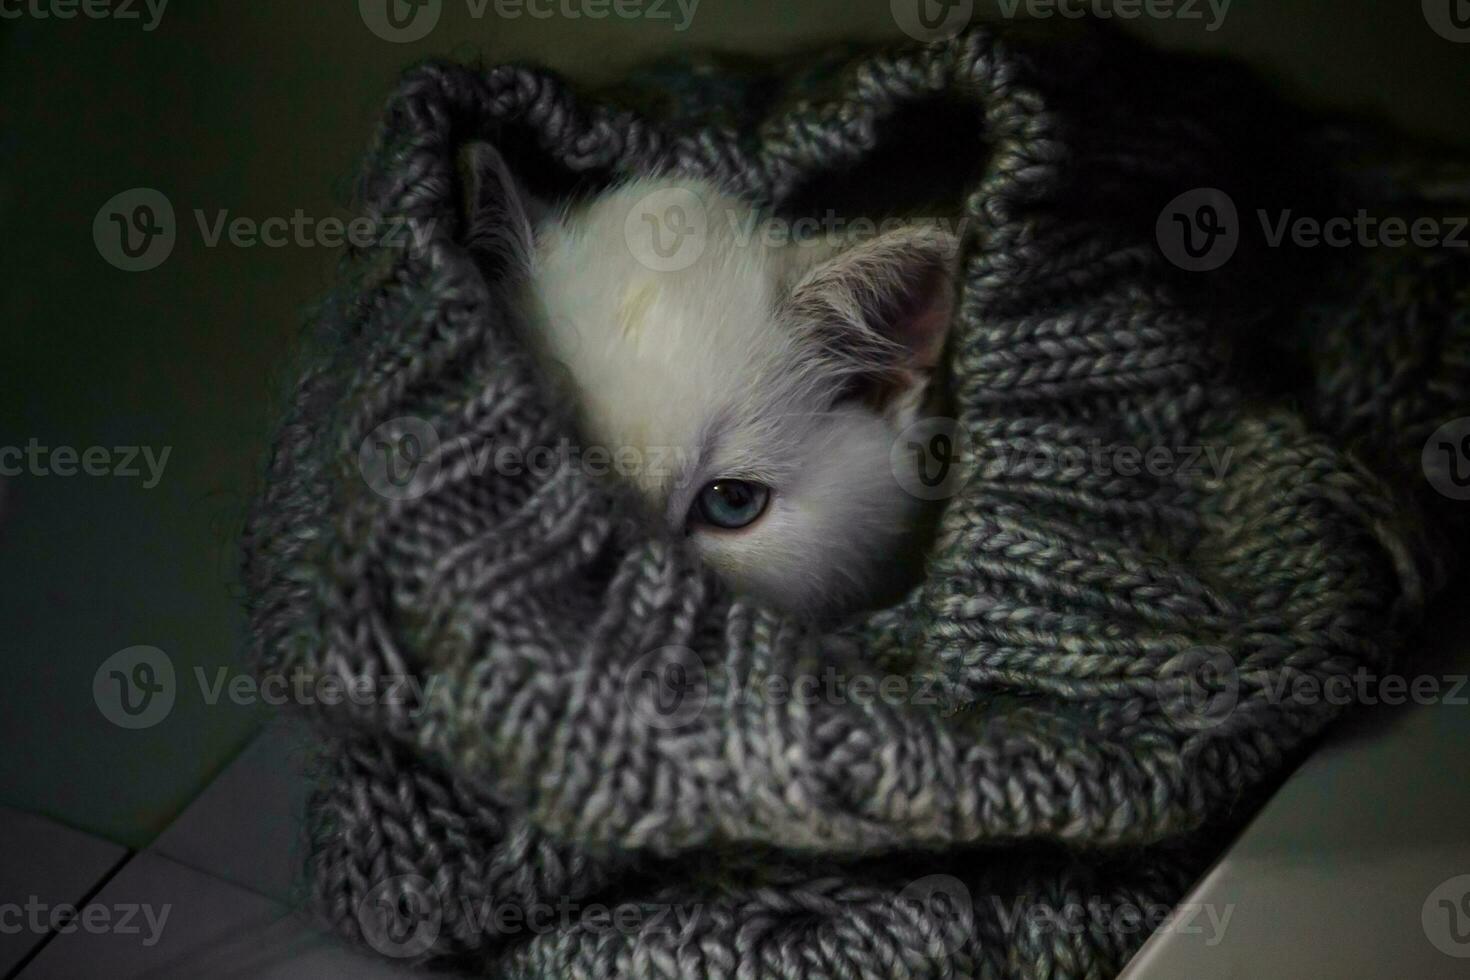 Scared kitten hiding in a gray cap. Soft focus photo